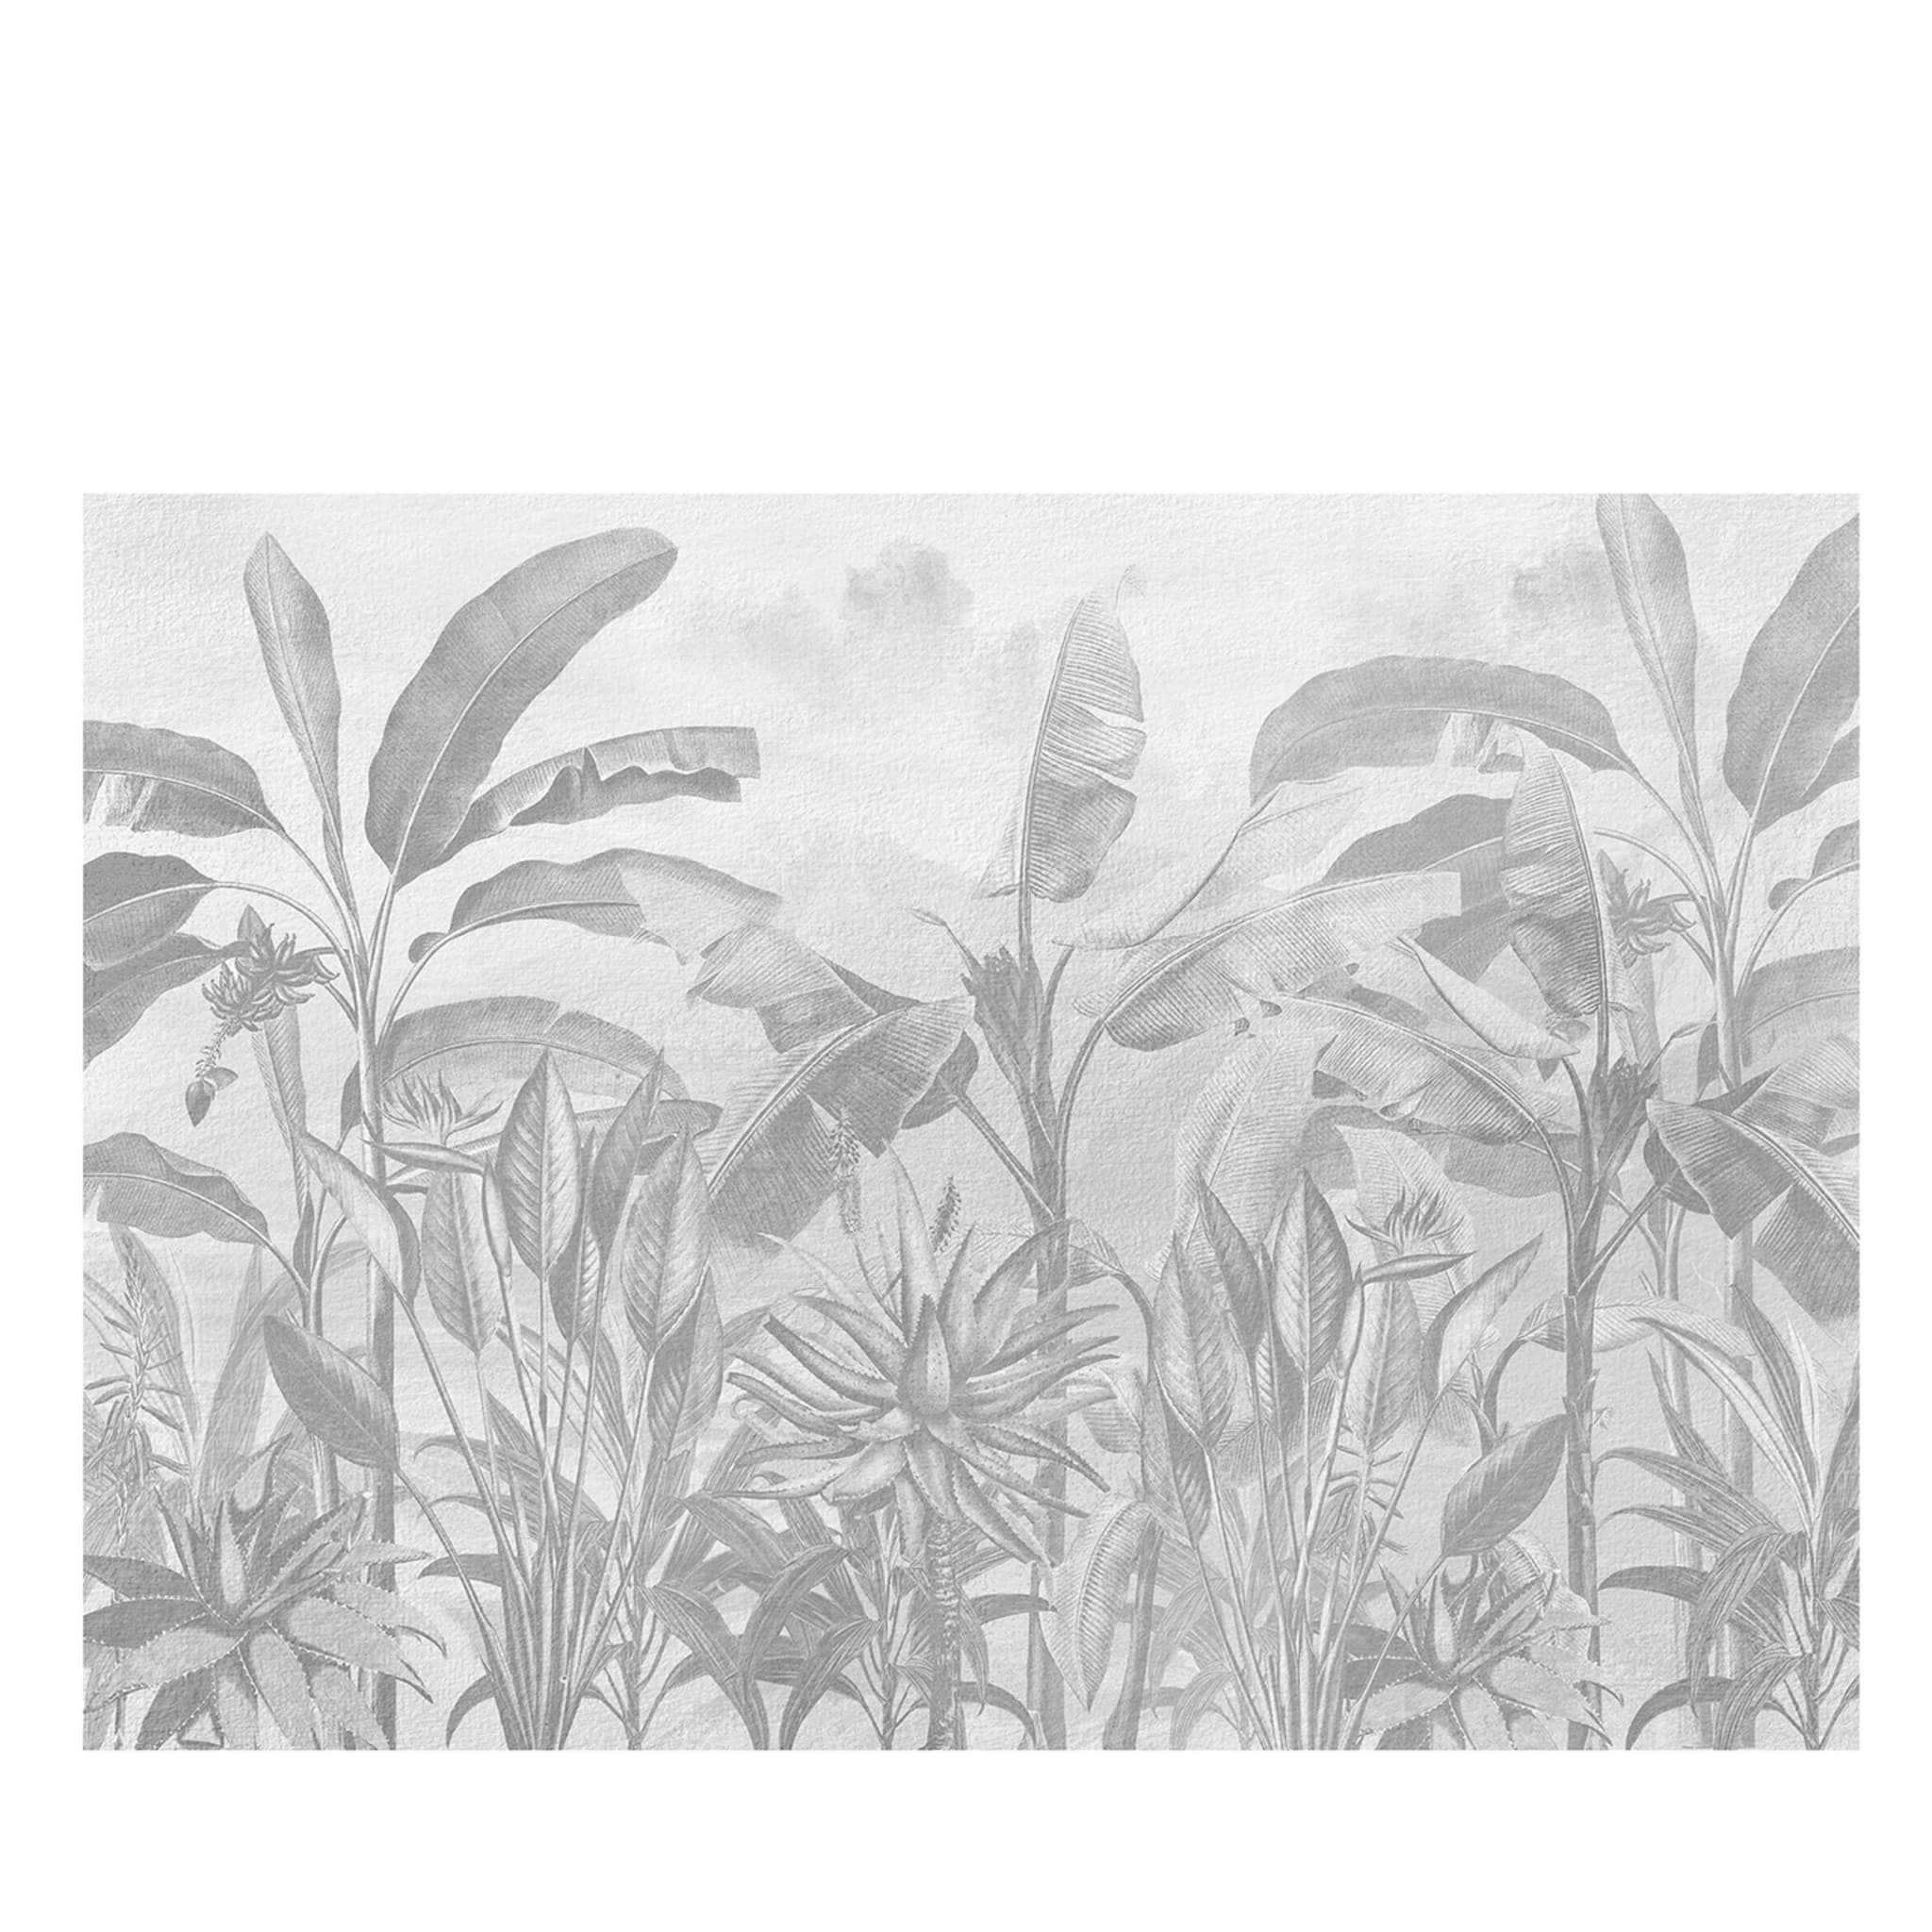 B&W plants textured wallpaper - Main view